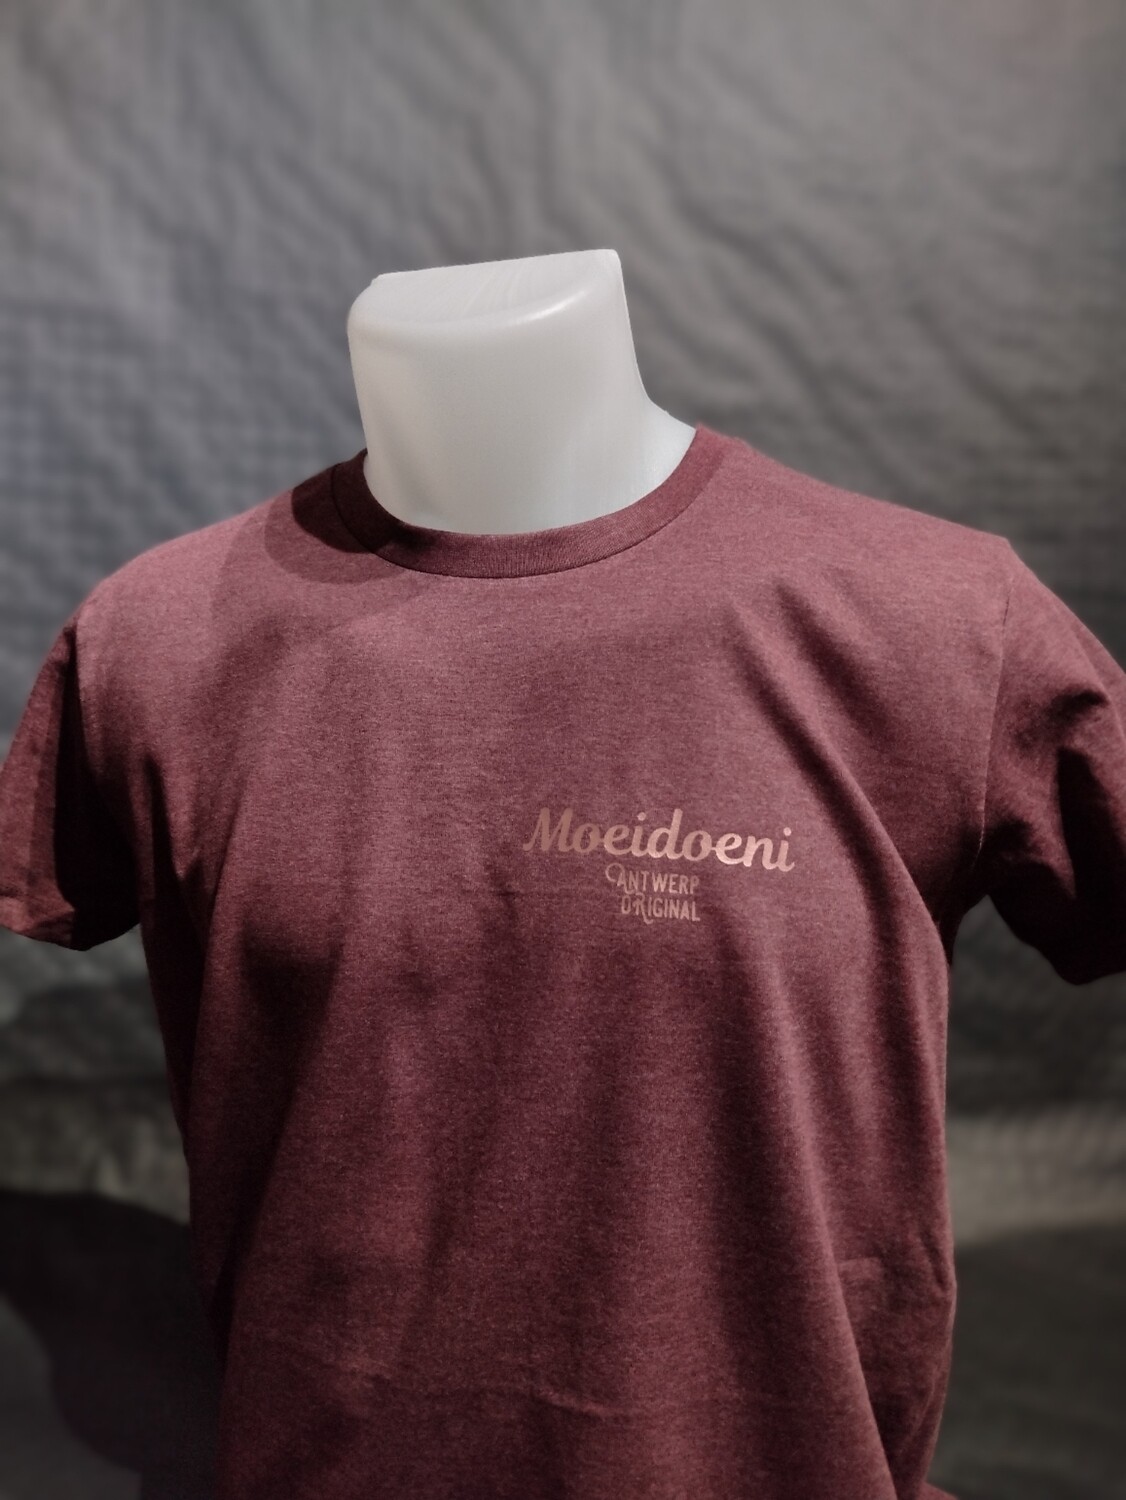 T shirt - Moeidoeni